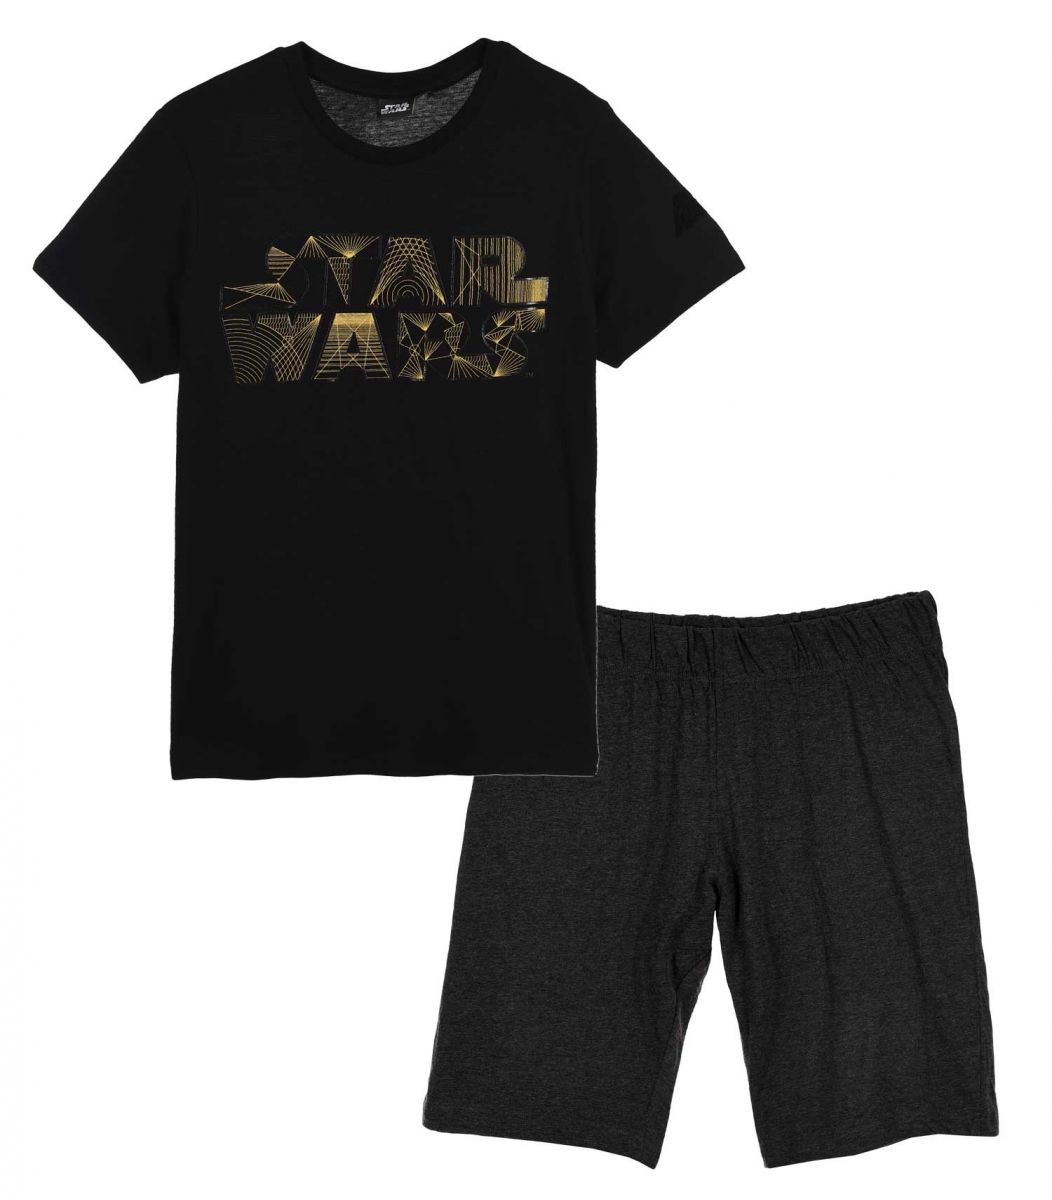 Man Pajama Star Wars